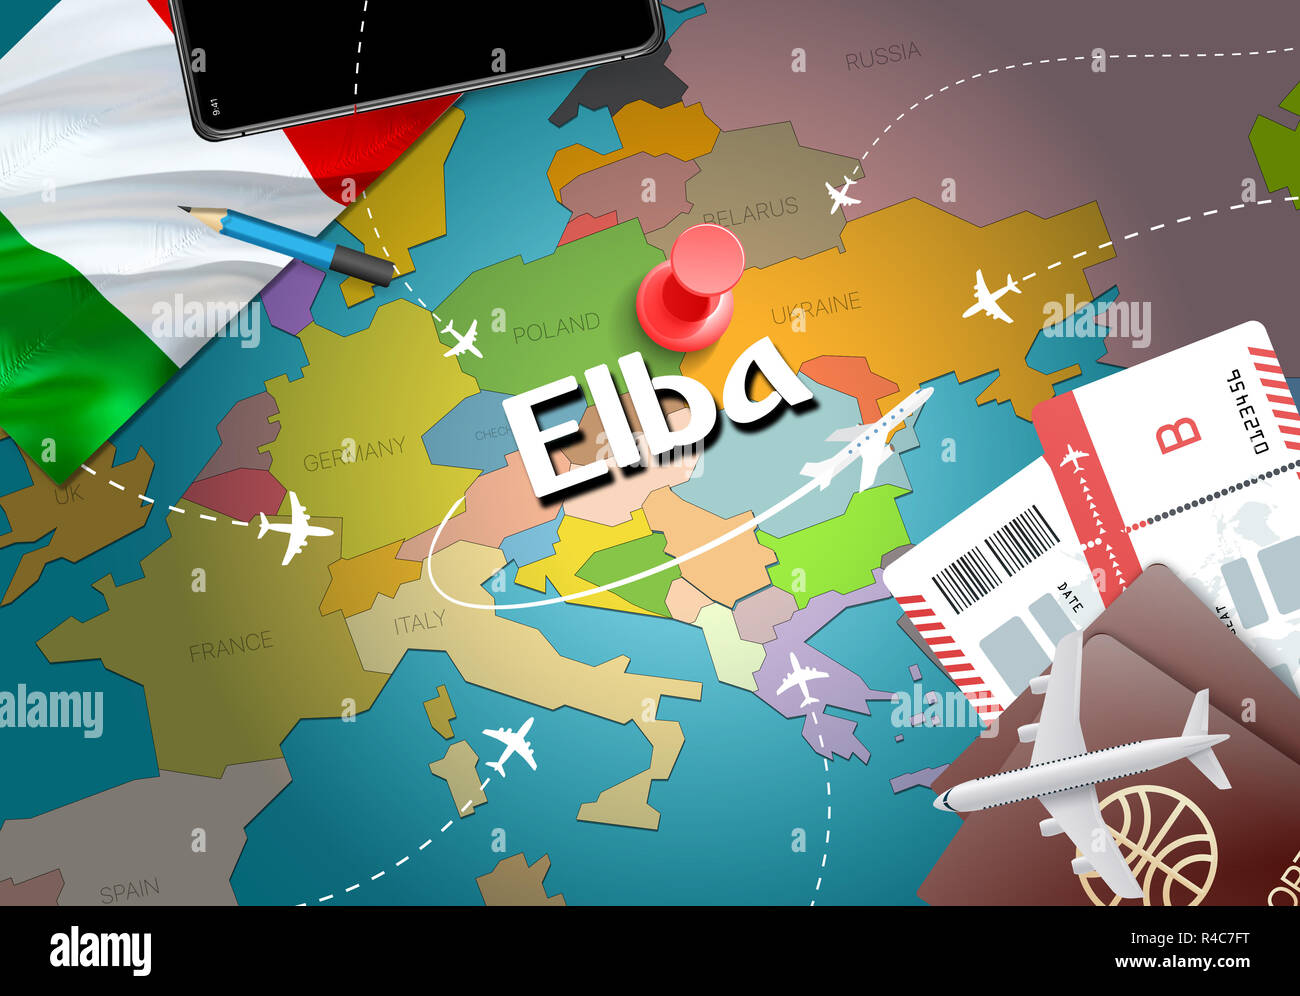 Elba city travel and tourism destination concept. Italy flag and ...